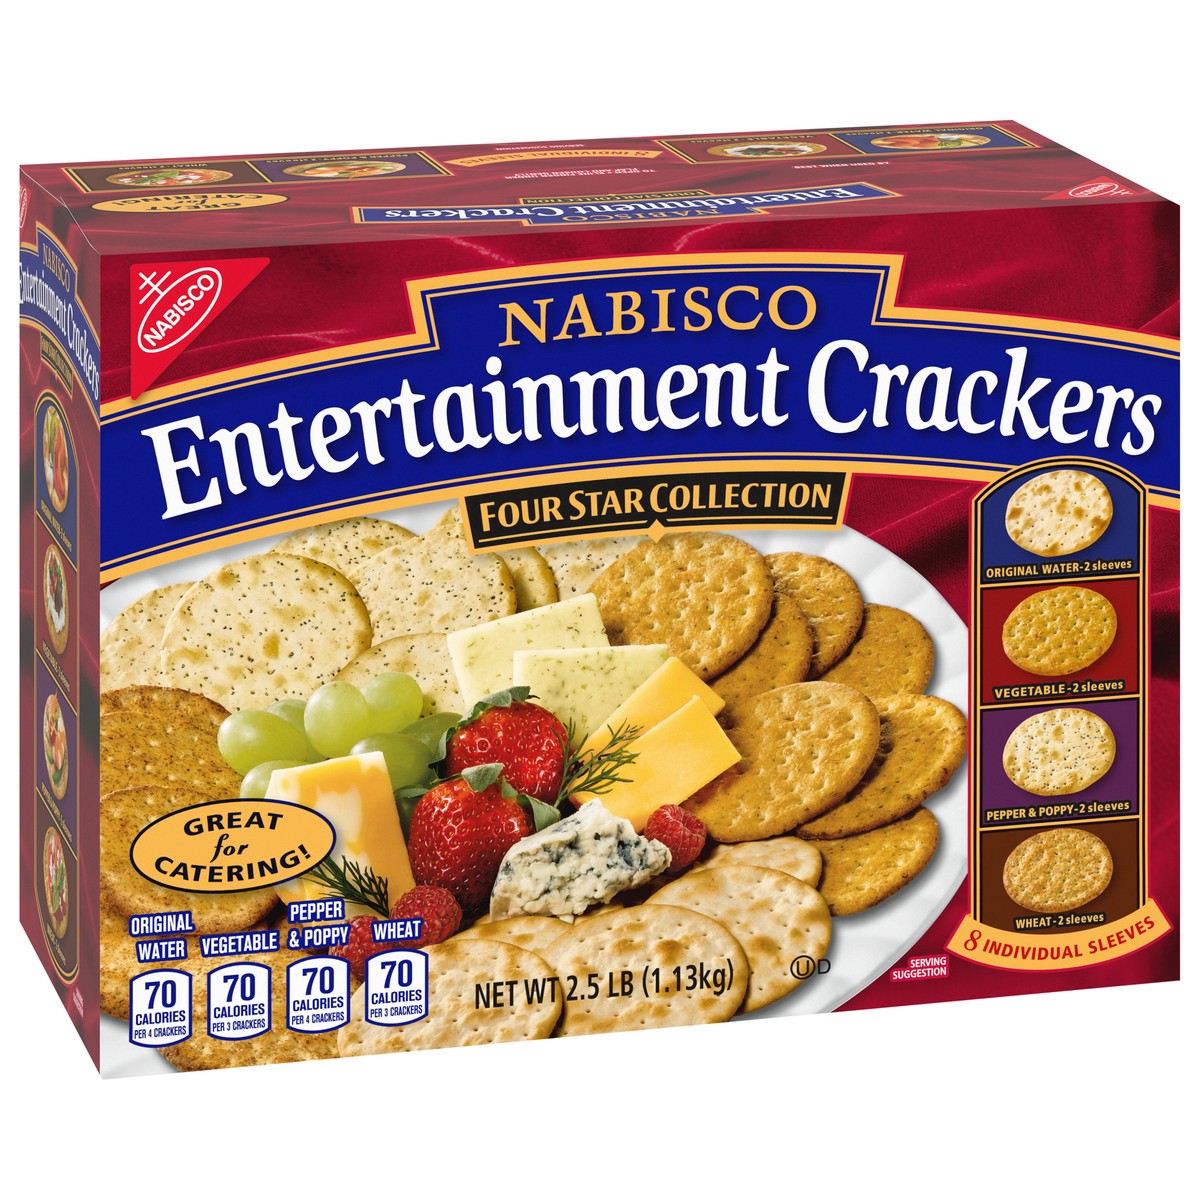 slide 14 of 14, Nabisco Entertainment Crackers Variety Pack, Original Water, Vegetable, Pepper & Poppy, Wheat, 8 Individual Sleeves, 2 lb 8 oz, 40.2 oz